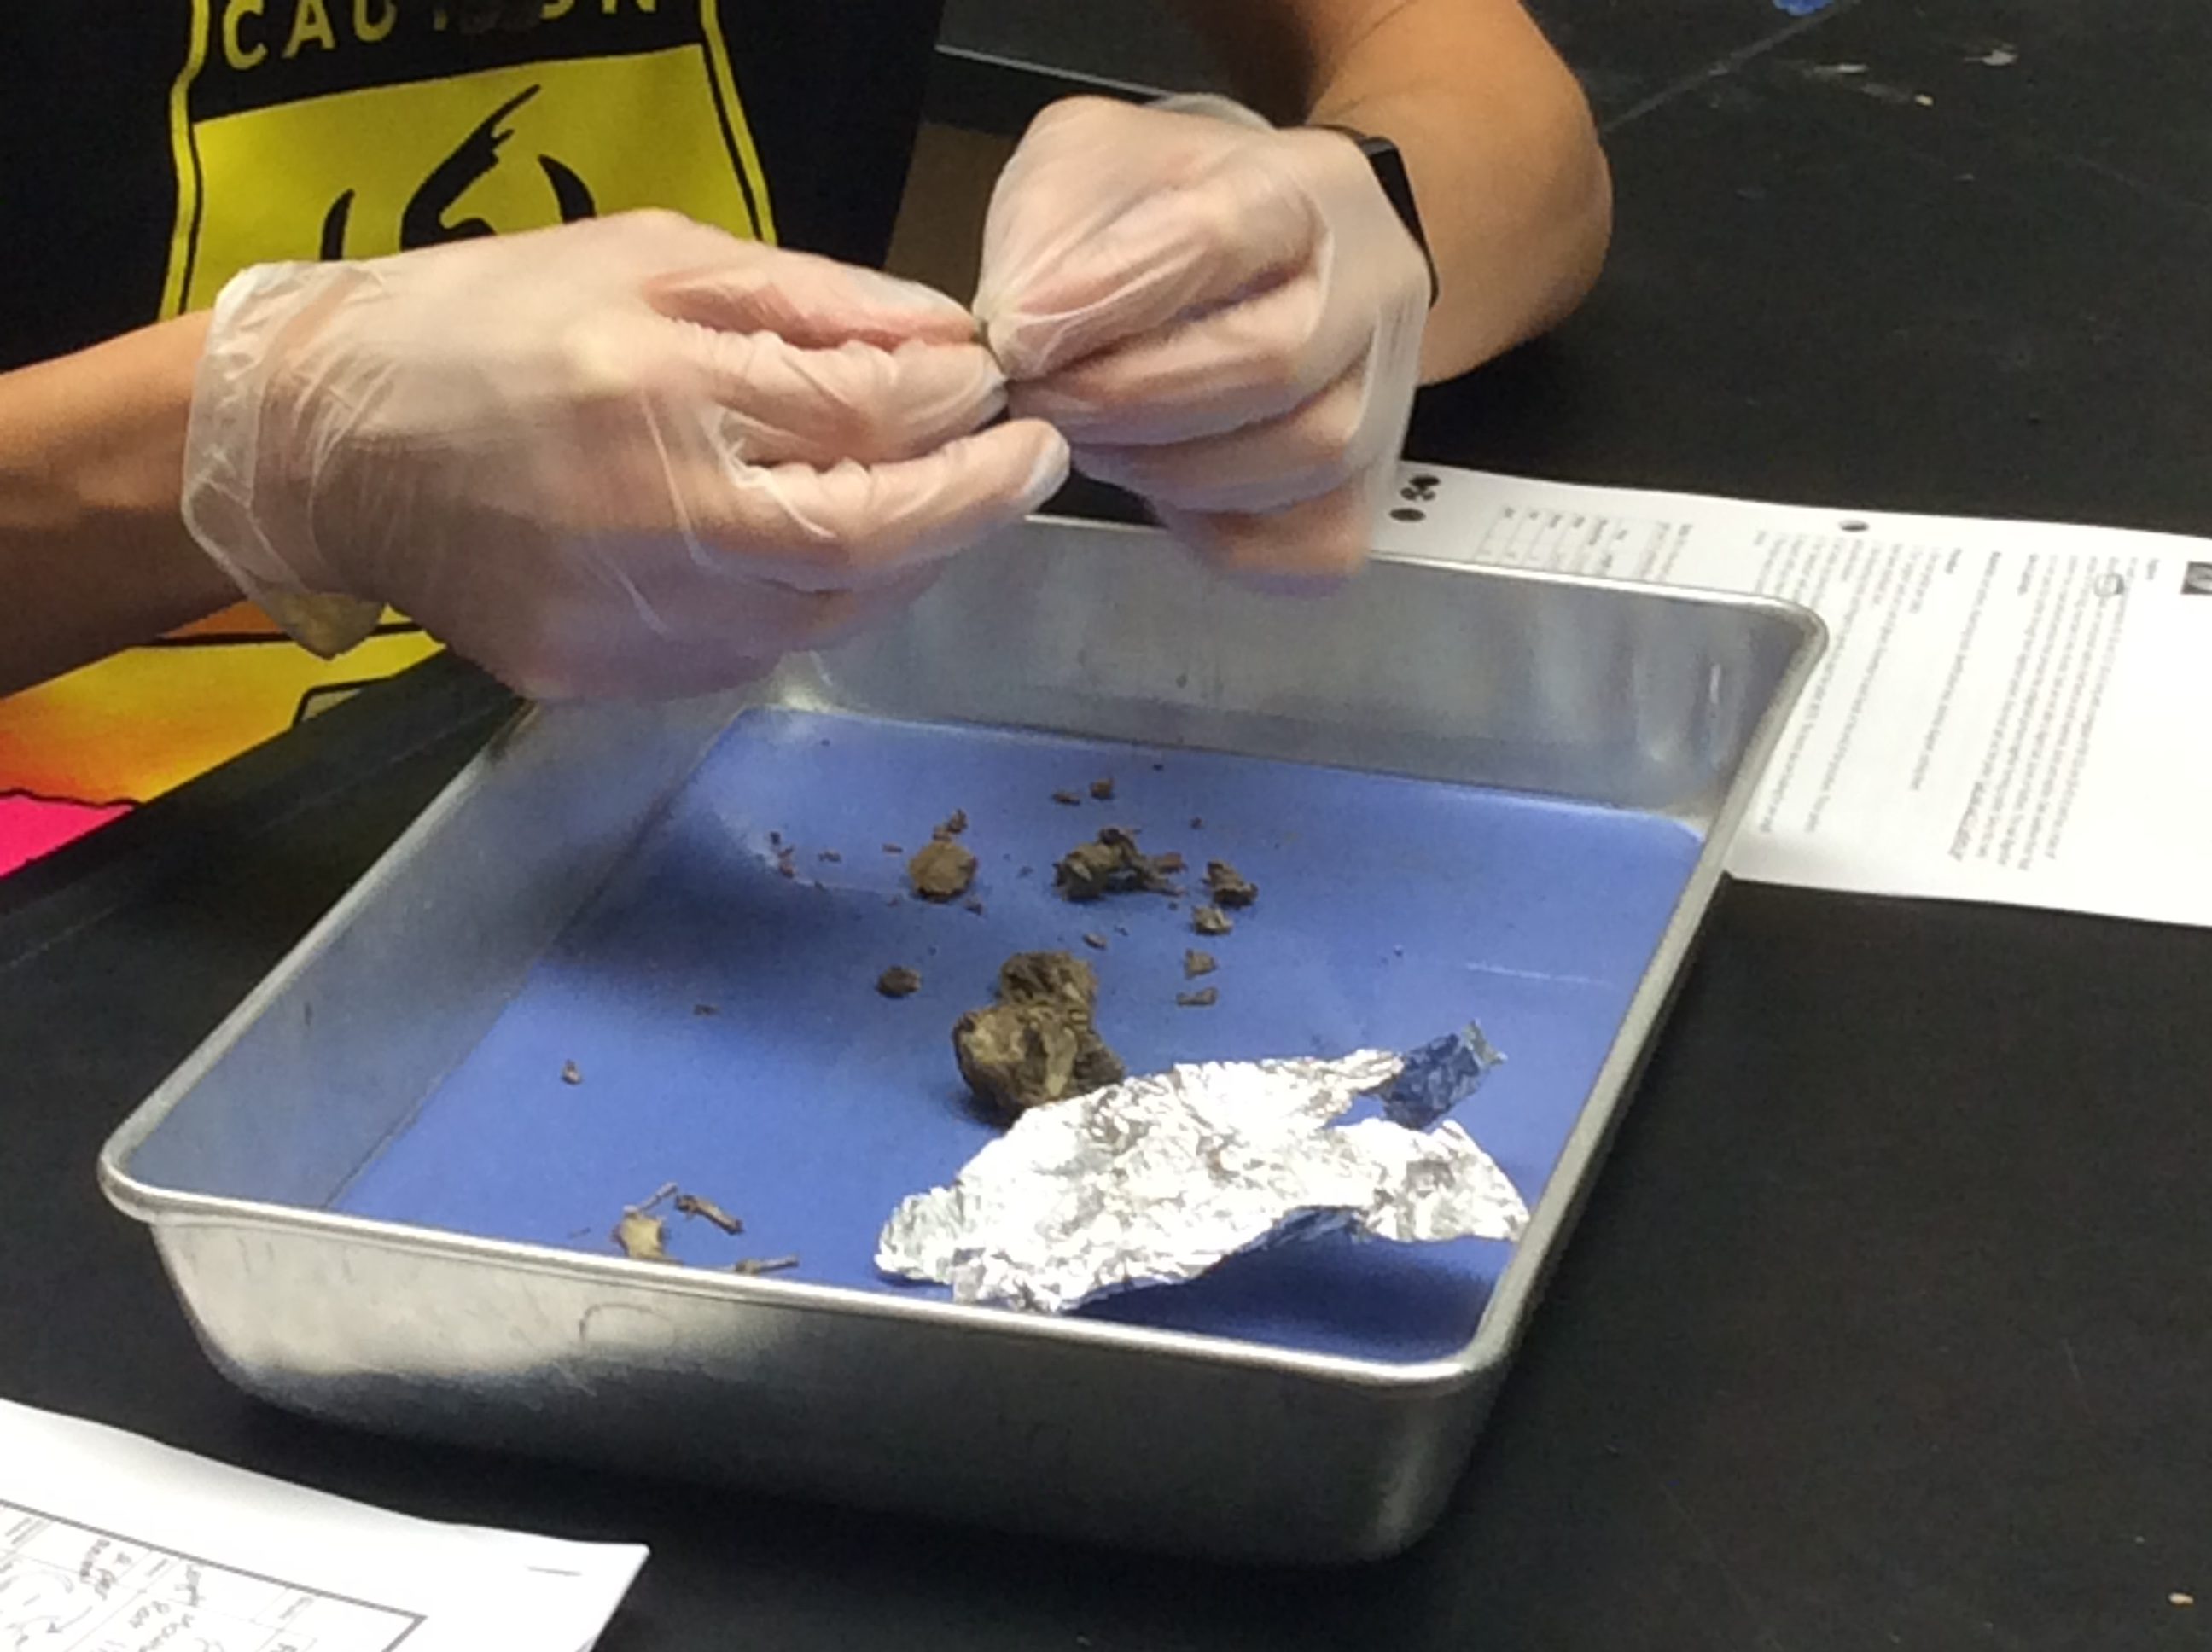 owl pellet dissection lab hypothesis